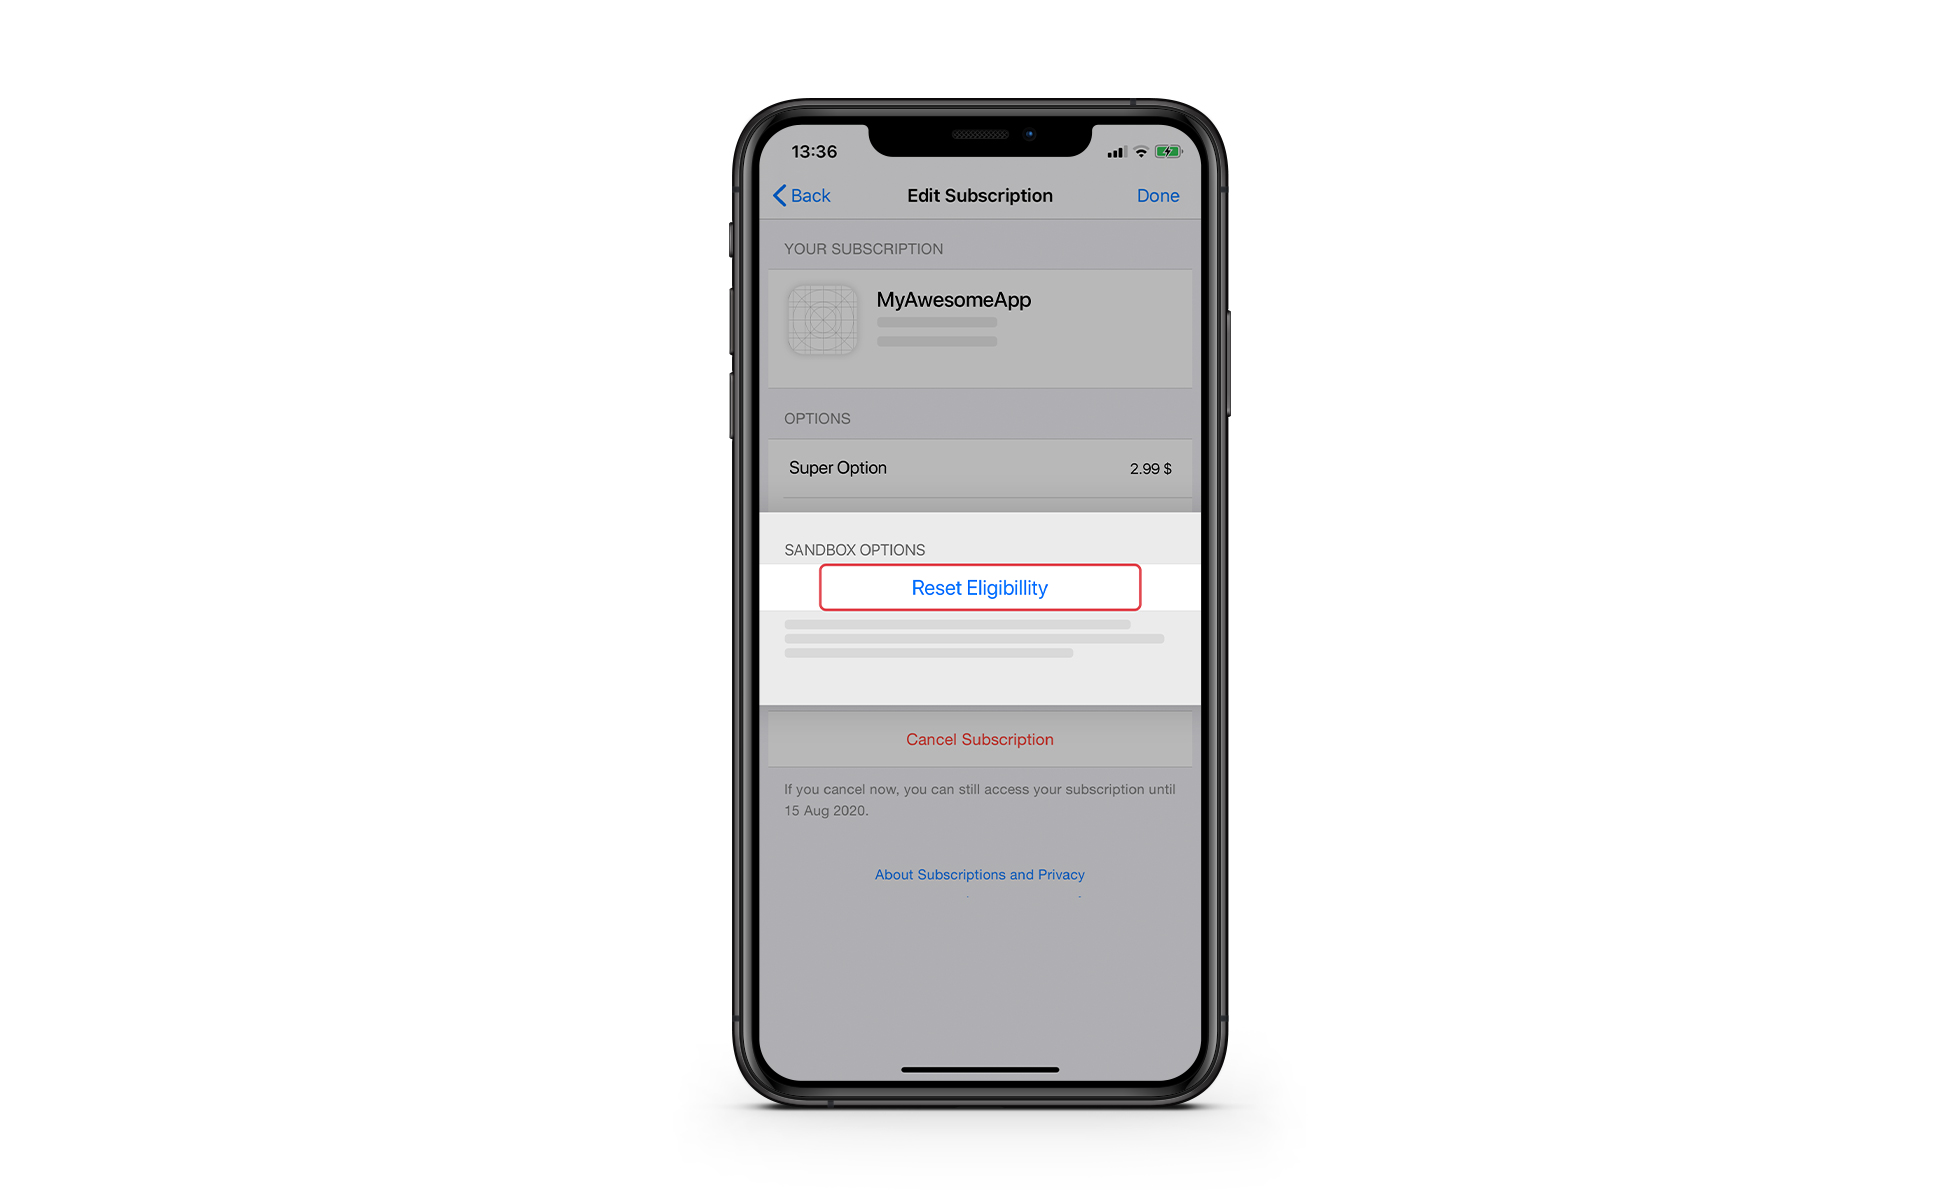 Sandbox options in iPhone; edit subscriptions